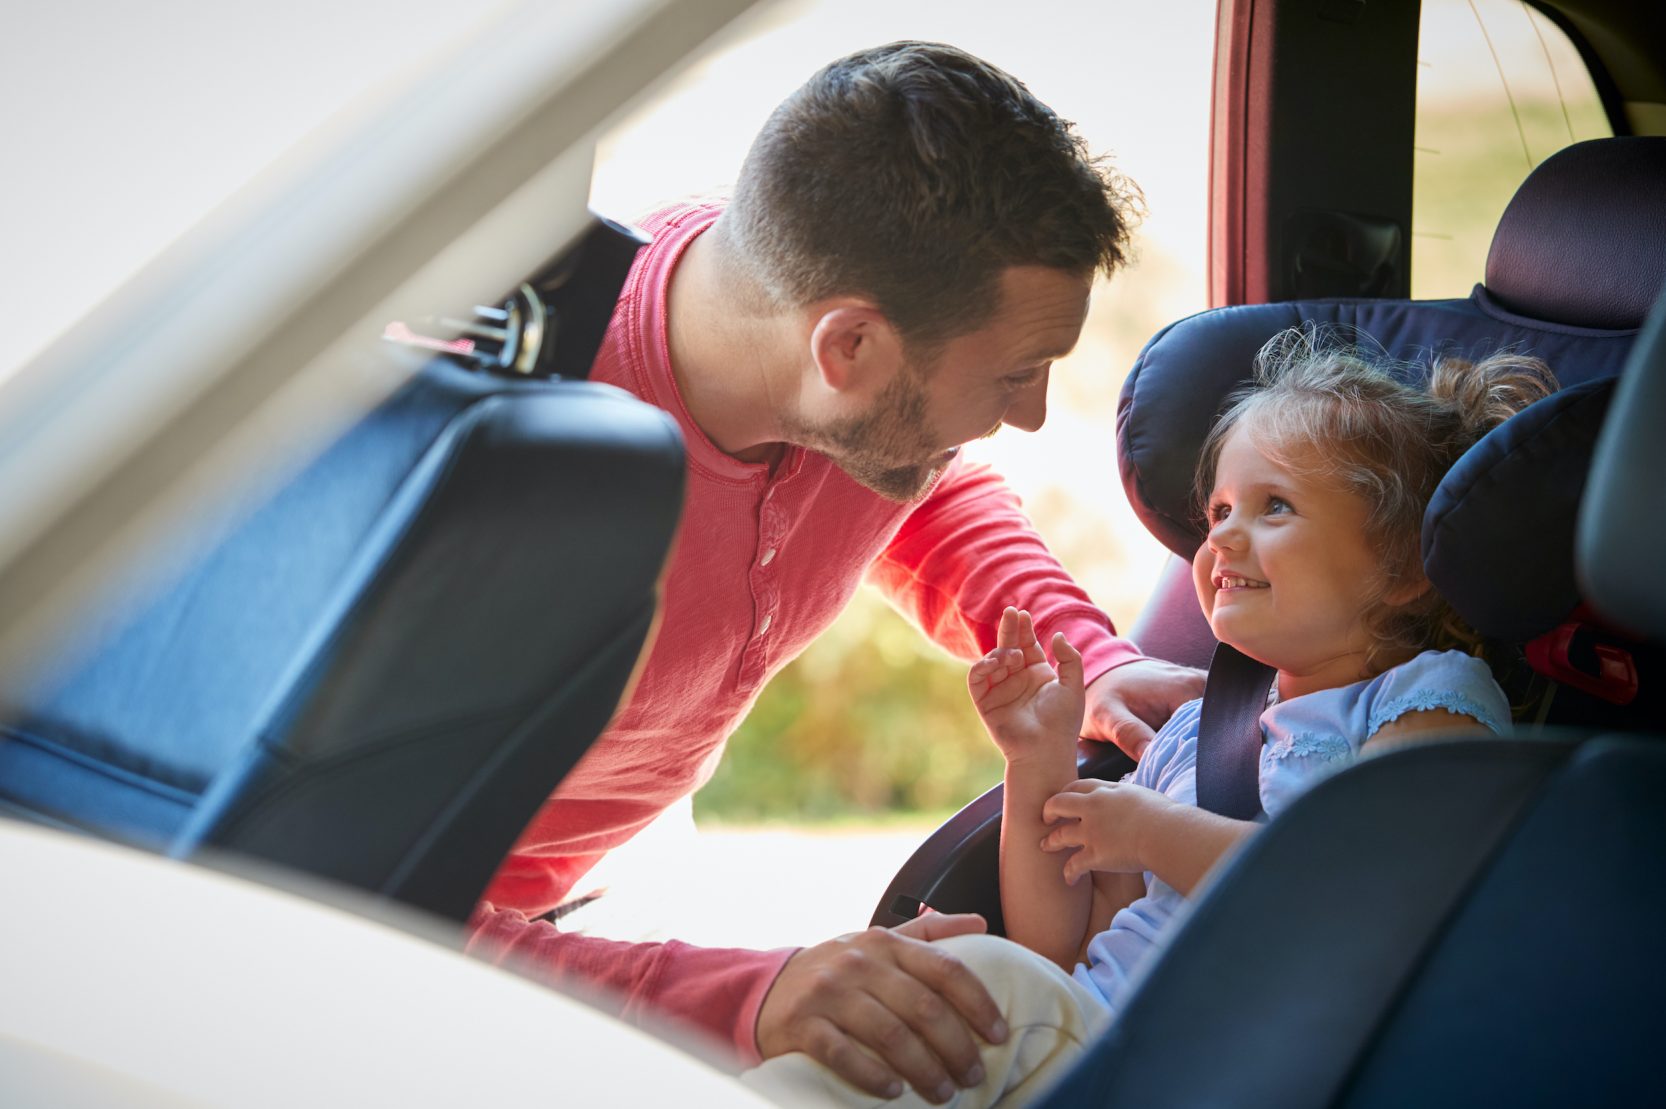 HMC cautions public about dangers of leaving children in hot cars